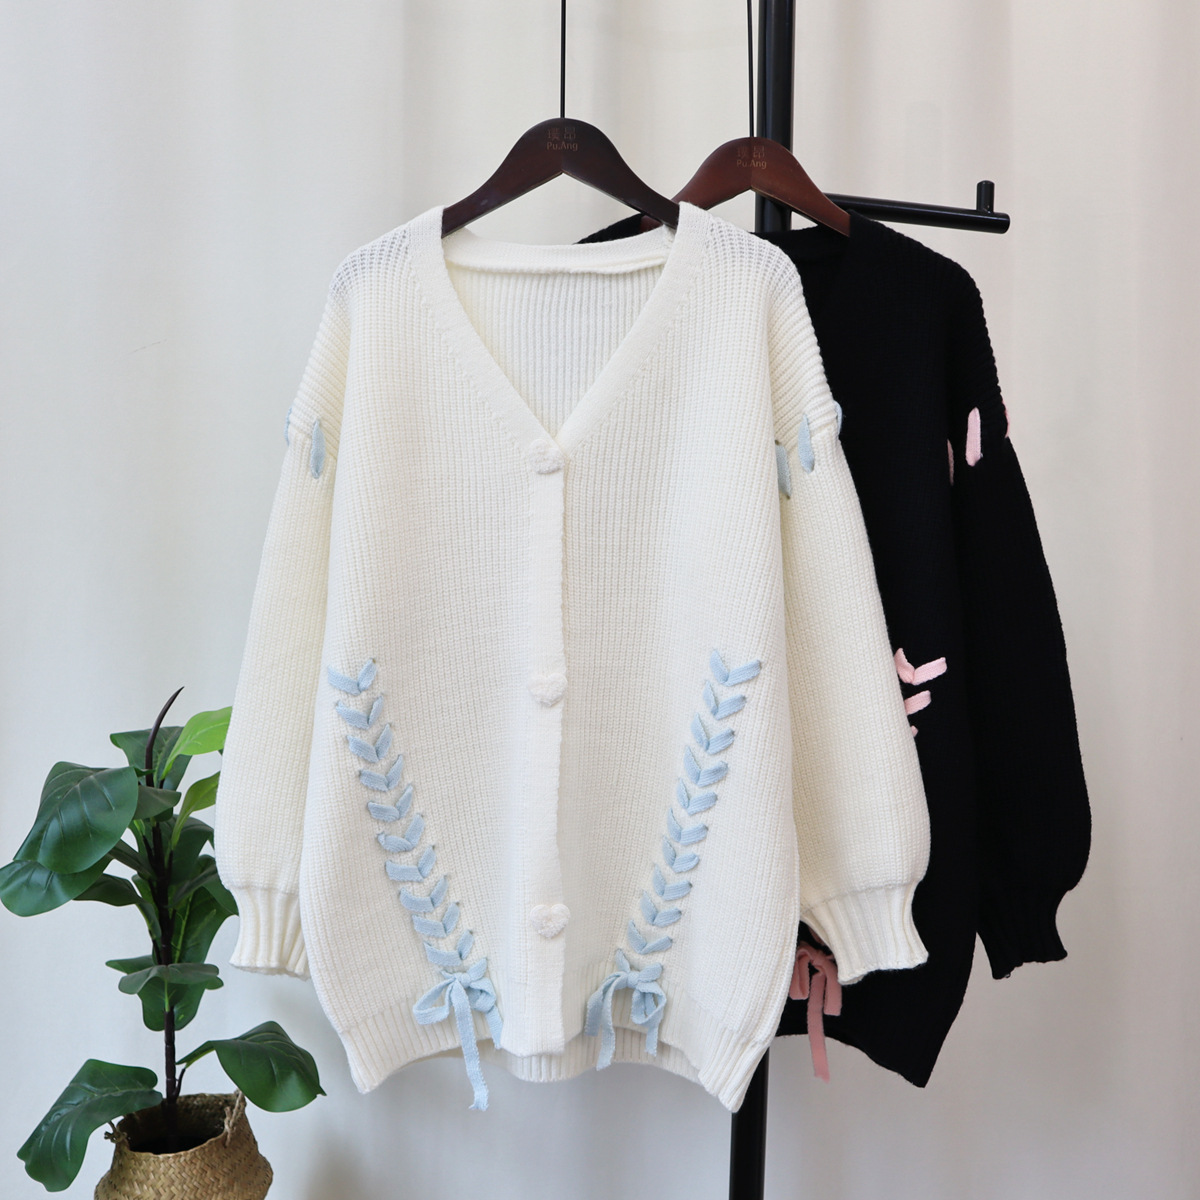 Design Sense Strap Knit Cardigan Women's Advanced Sense Lazy Wind Sweet Cool Loose Sweater Coat